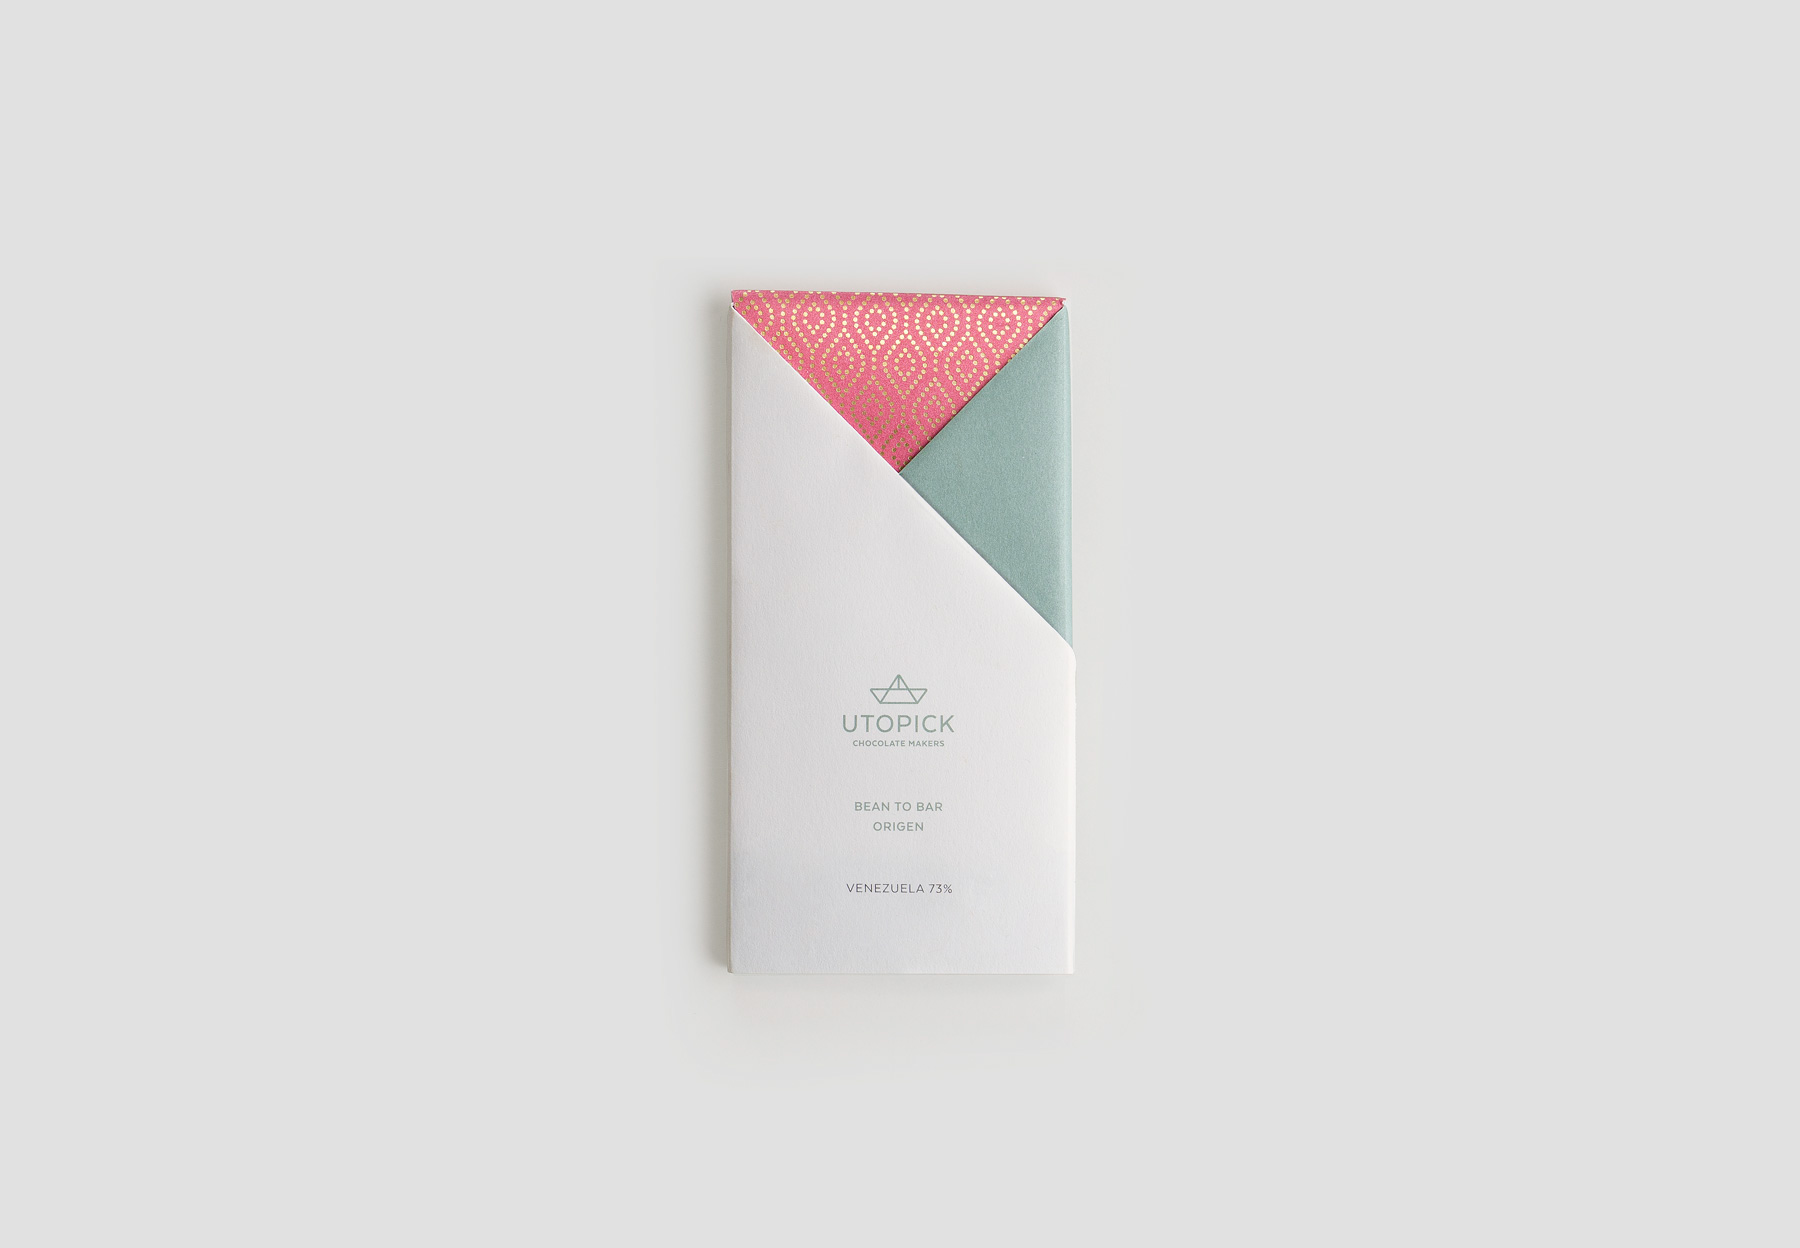 lavernia-cienfuegos-utopick-chocolates-corporate-identity-packaging-chocolate-bar-06